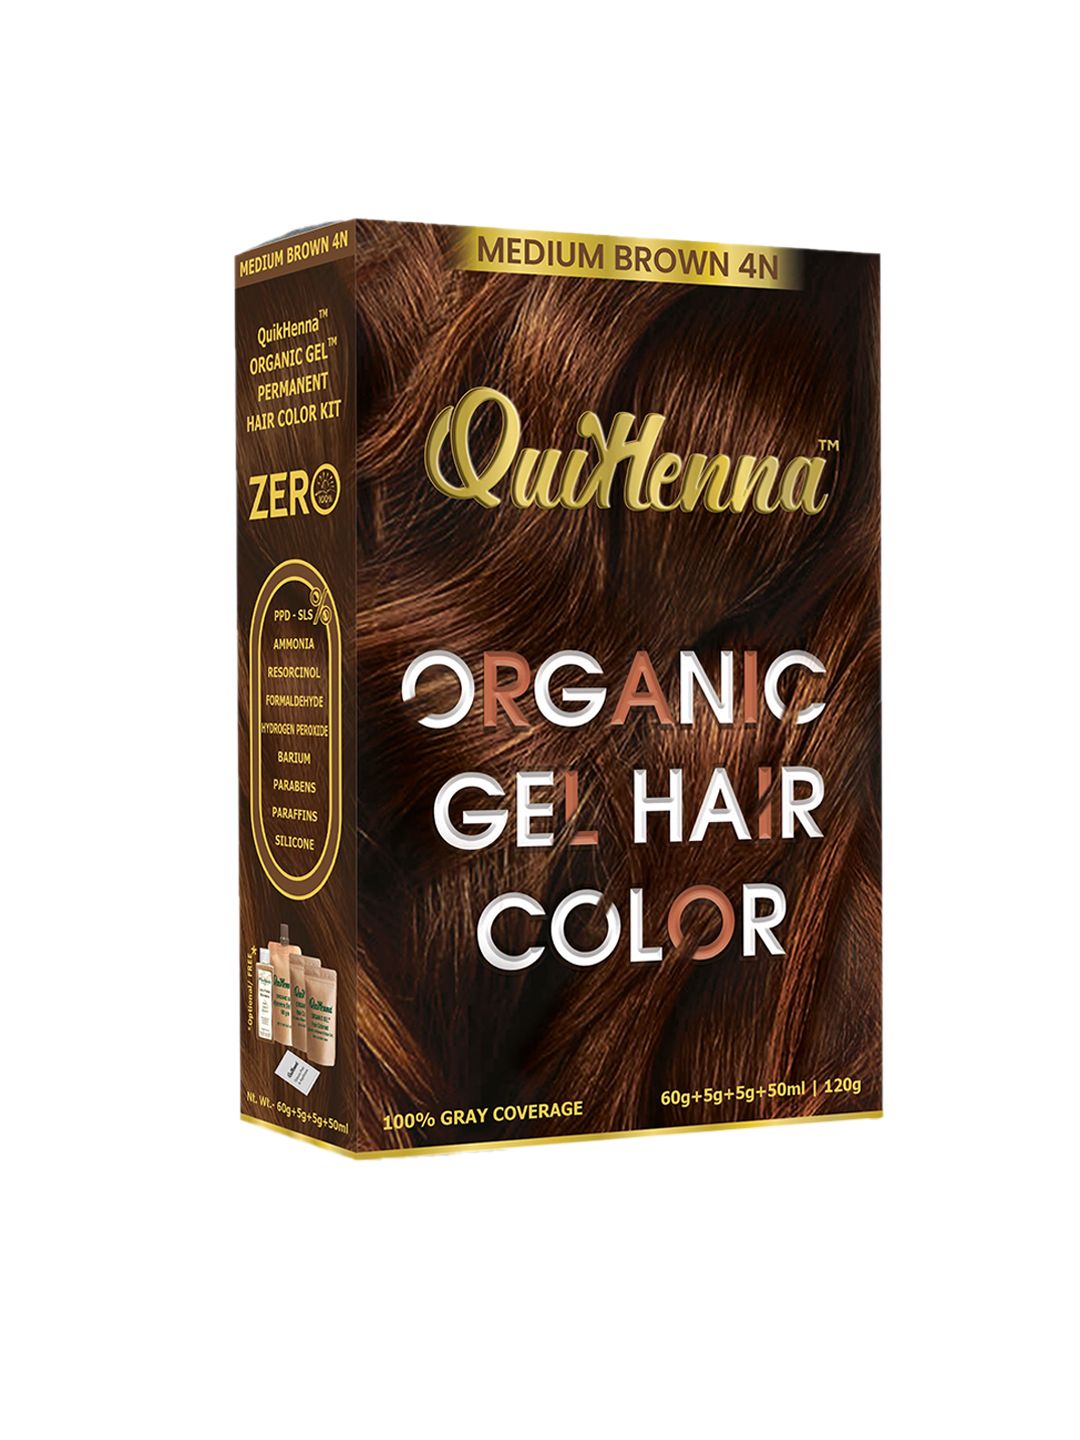 QUIKHENNA Damage Free Organic Gel Hair Color-Medium Brown 120g Price in India